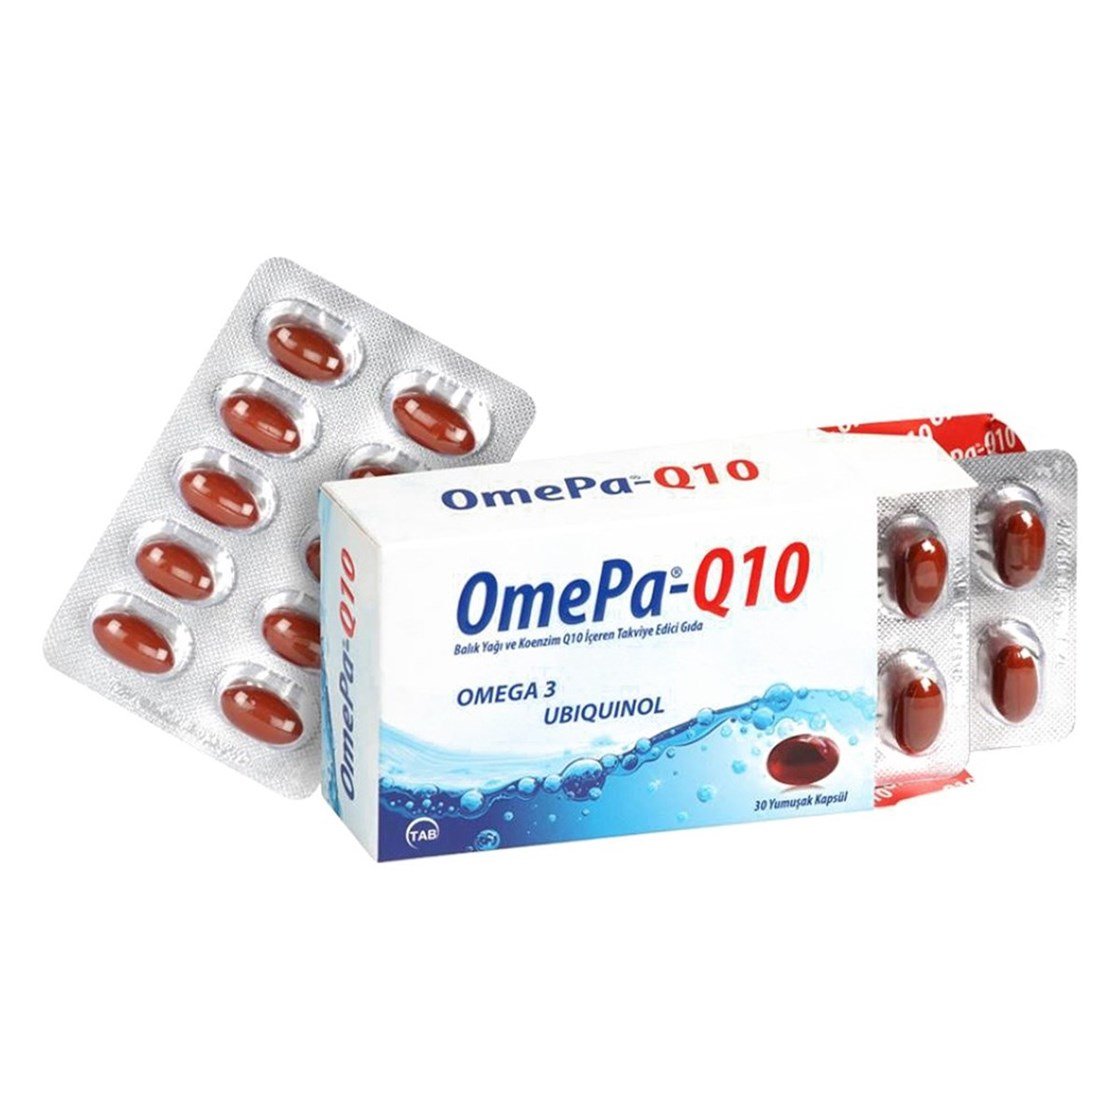 OmePa Q10 - Omega 3 Ve Koenzim Q10 (Ubiquinol) - 30 Yumuşak Kapsül |  Dermoailem